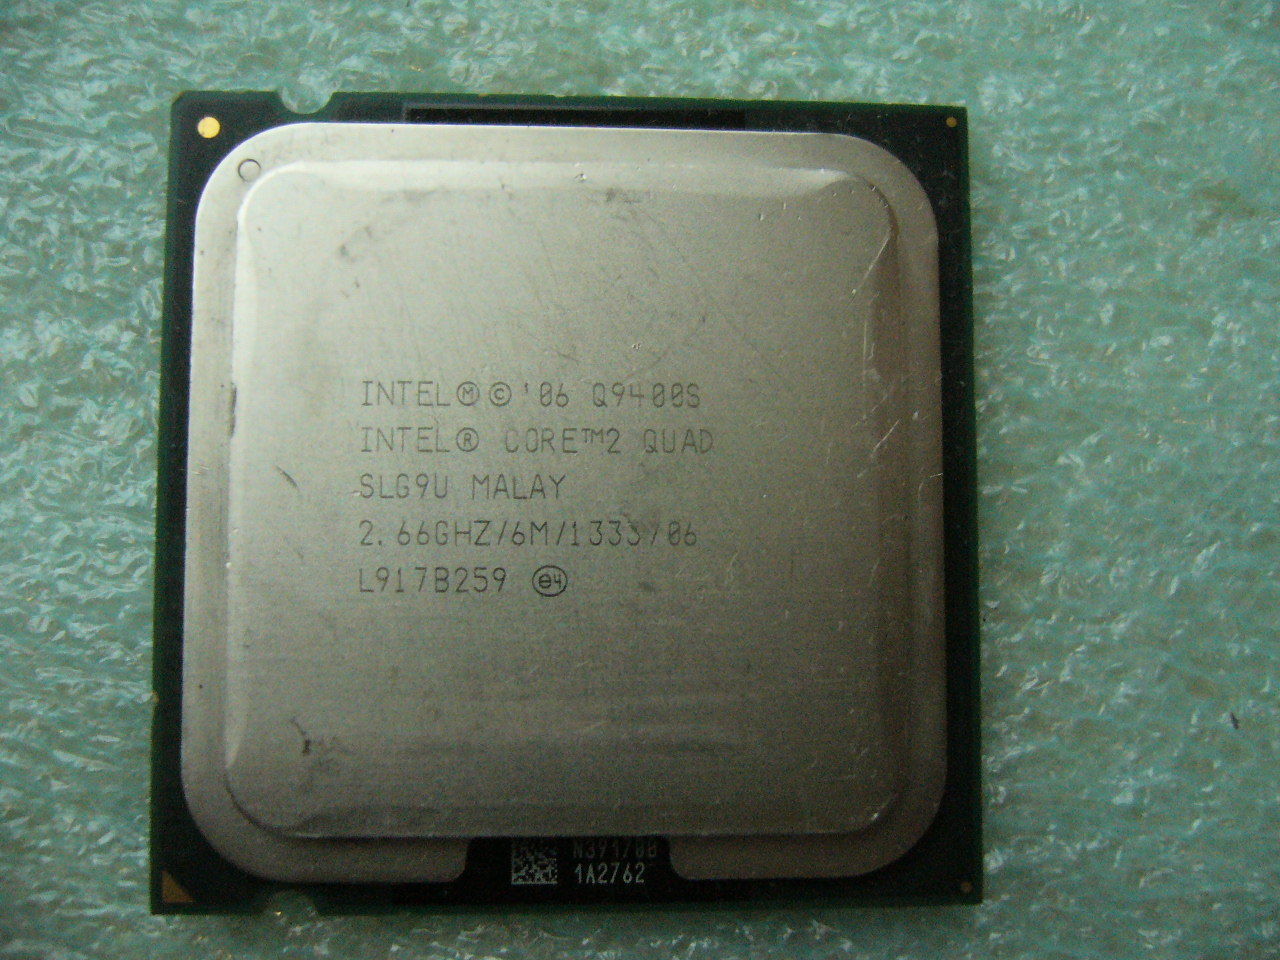 QTY 1x INTEL Quad Cores Q9400S CPU 2.66GHz/6MB/1333Mhz TDP 65W LGA775 SLG9U - Click Image to Close